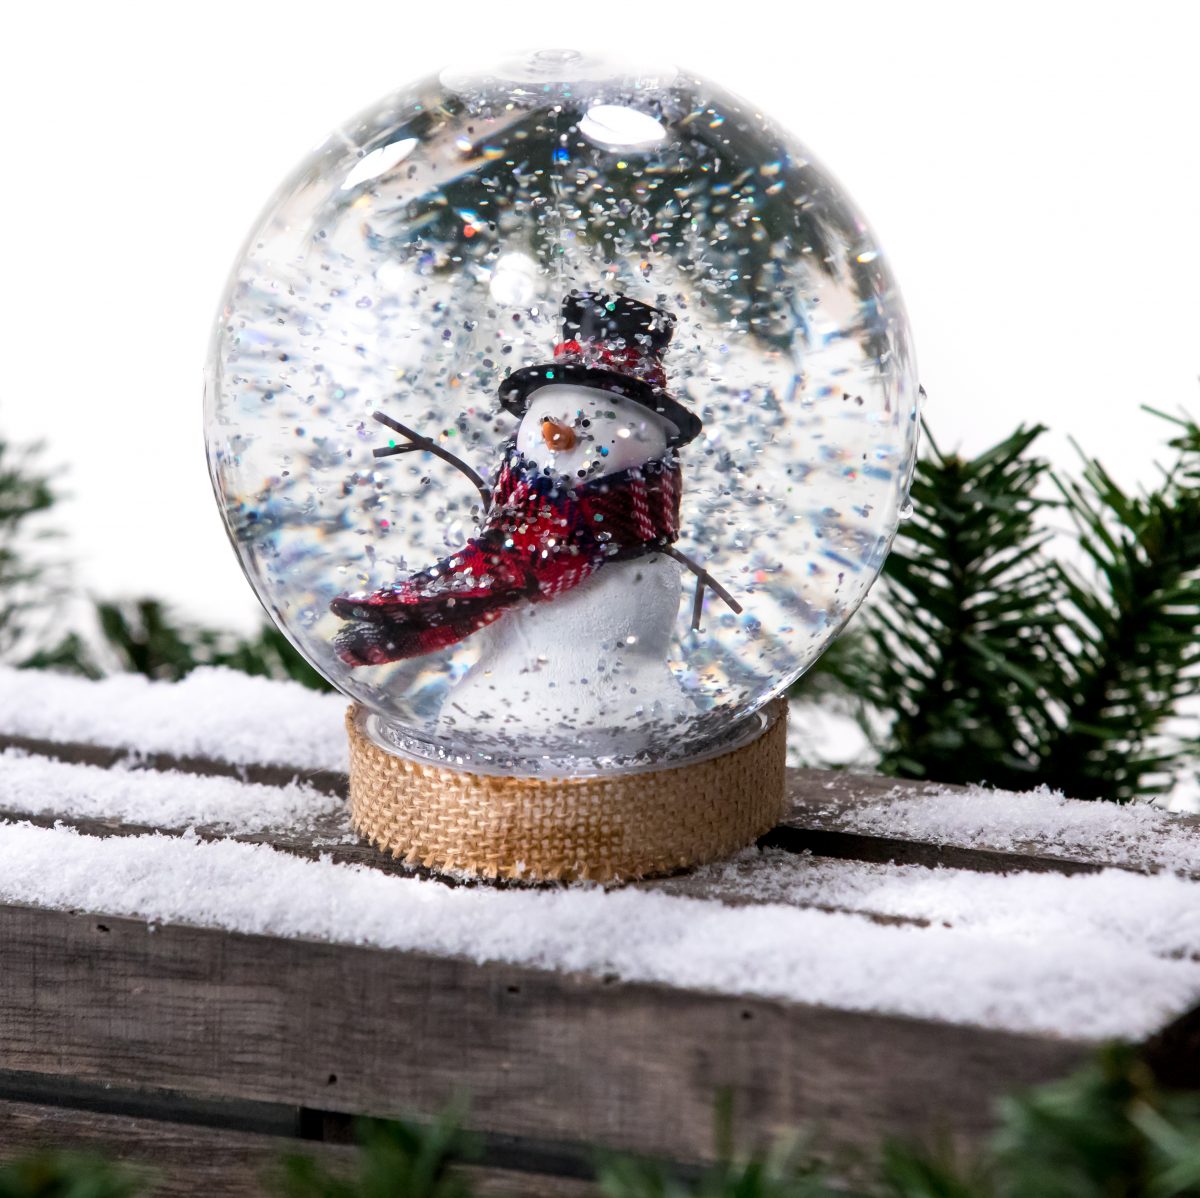 Homemade snow globe craft project